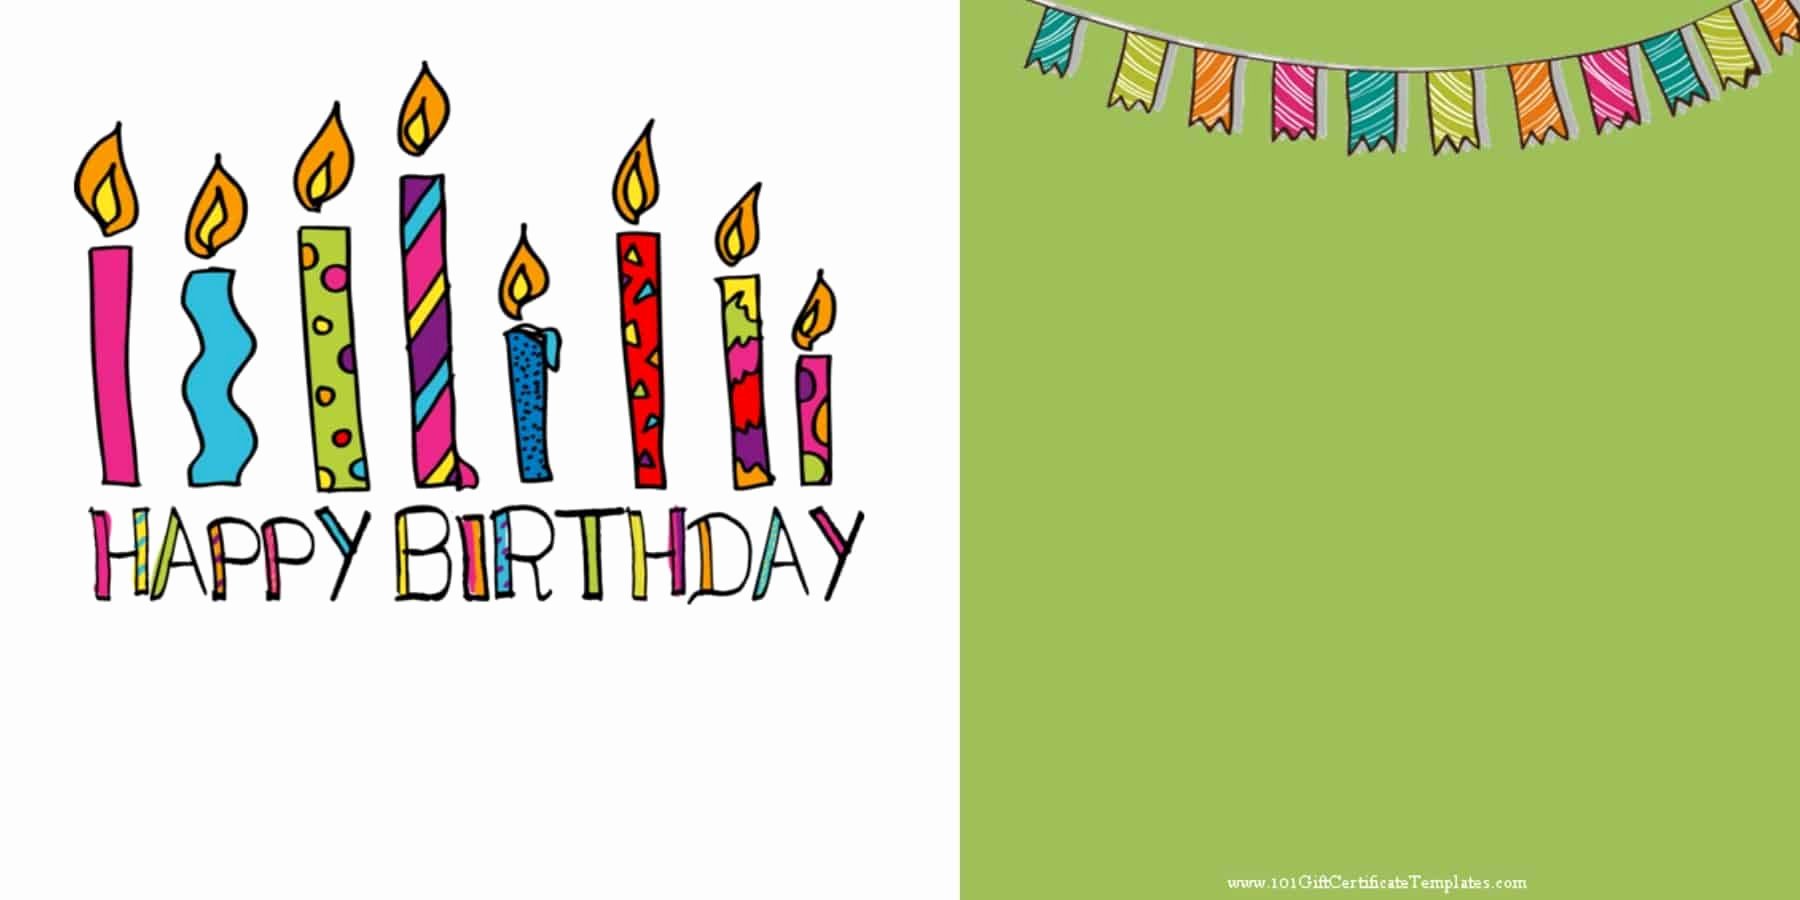 Free Printable Birthday Certificates Luxury Birthday Gift Certificate Templates 101 Gift Certificate